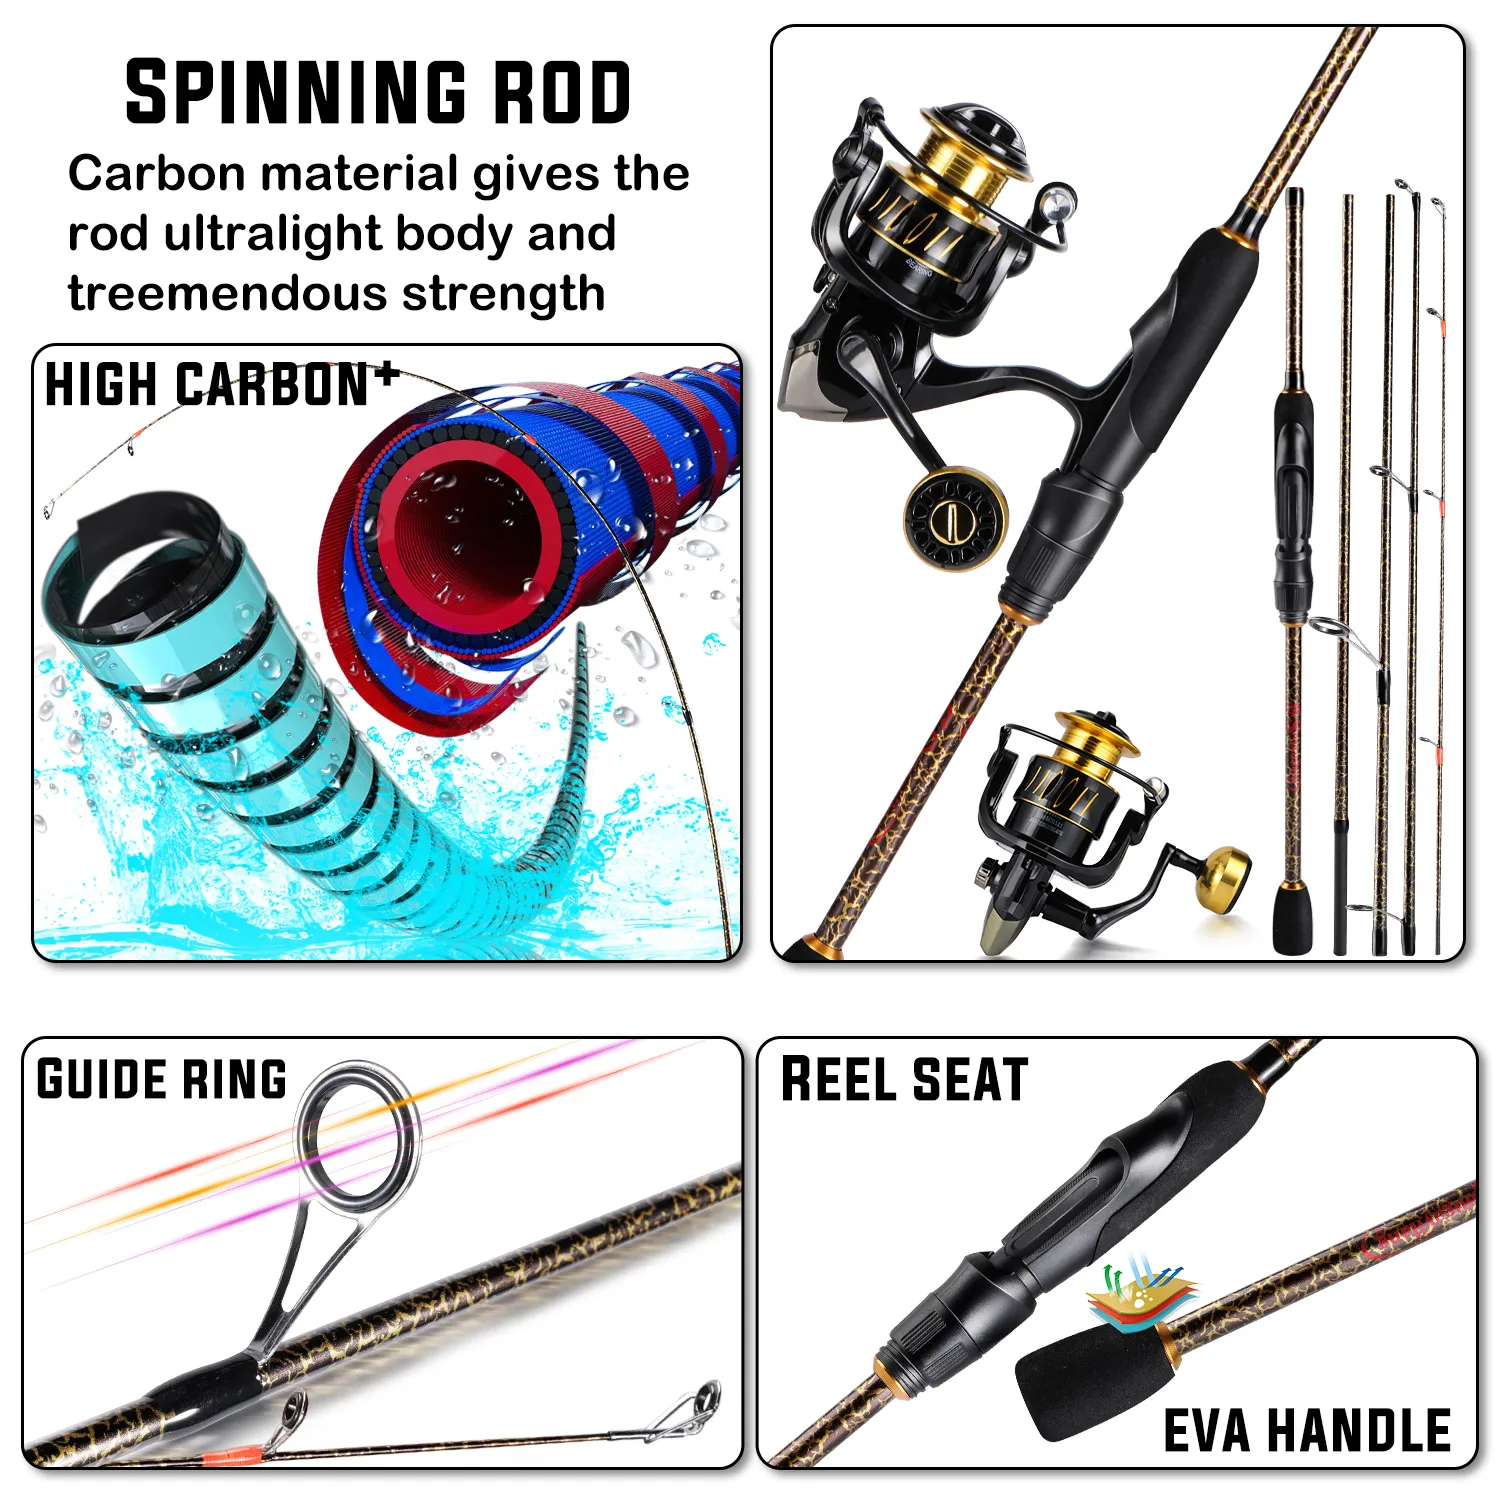 Sougayilang Fishing Rod and Reel Set Portable Carbon Feiber Rod Spinning  Fishing Reel for Freshwater and Saltwater Fishing Kit